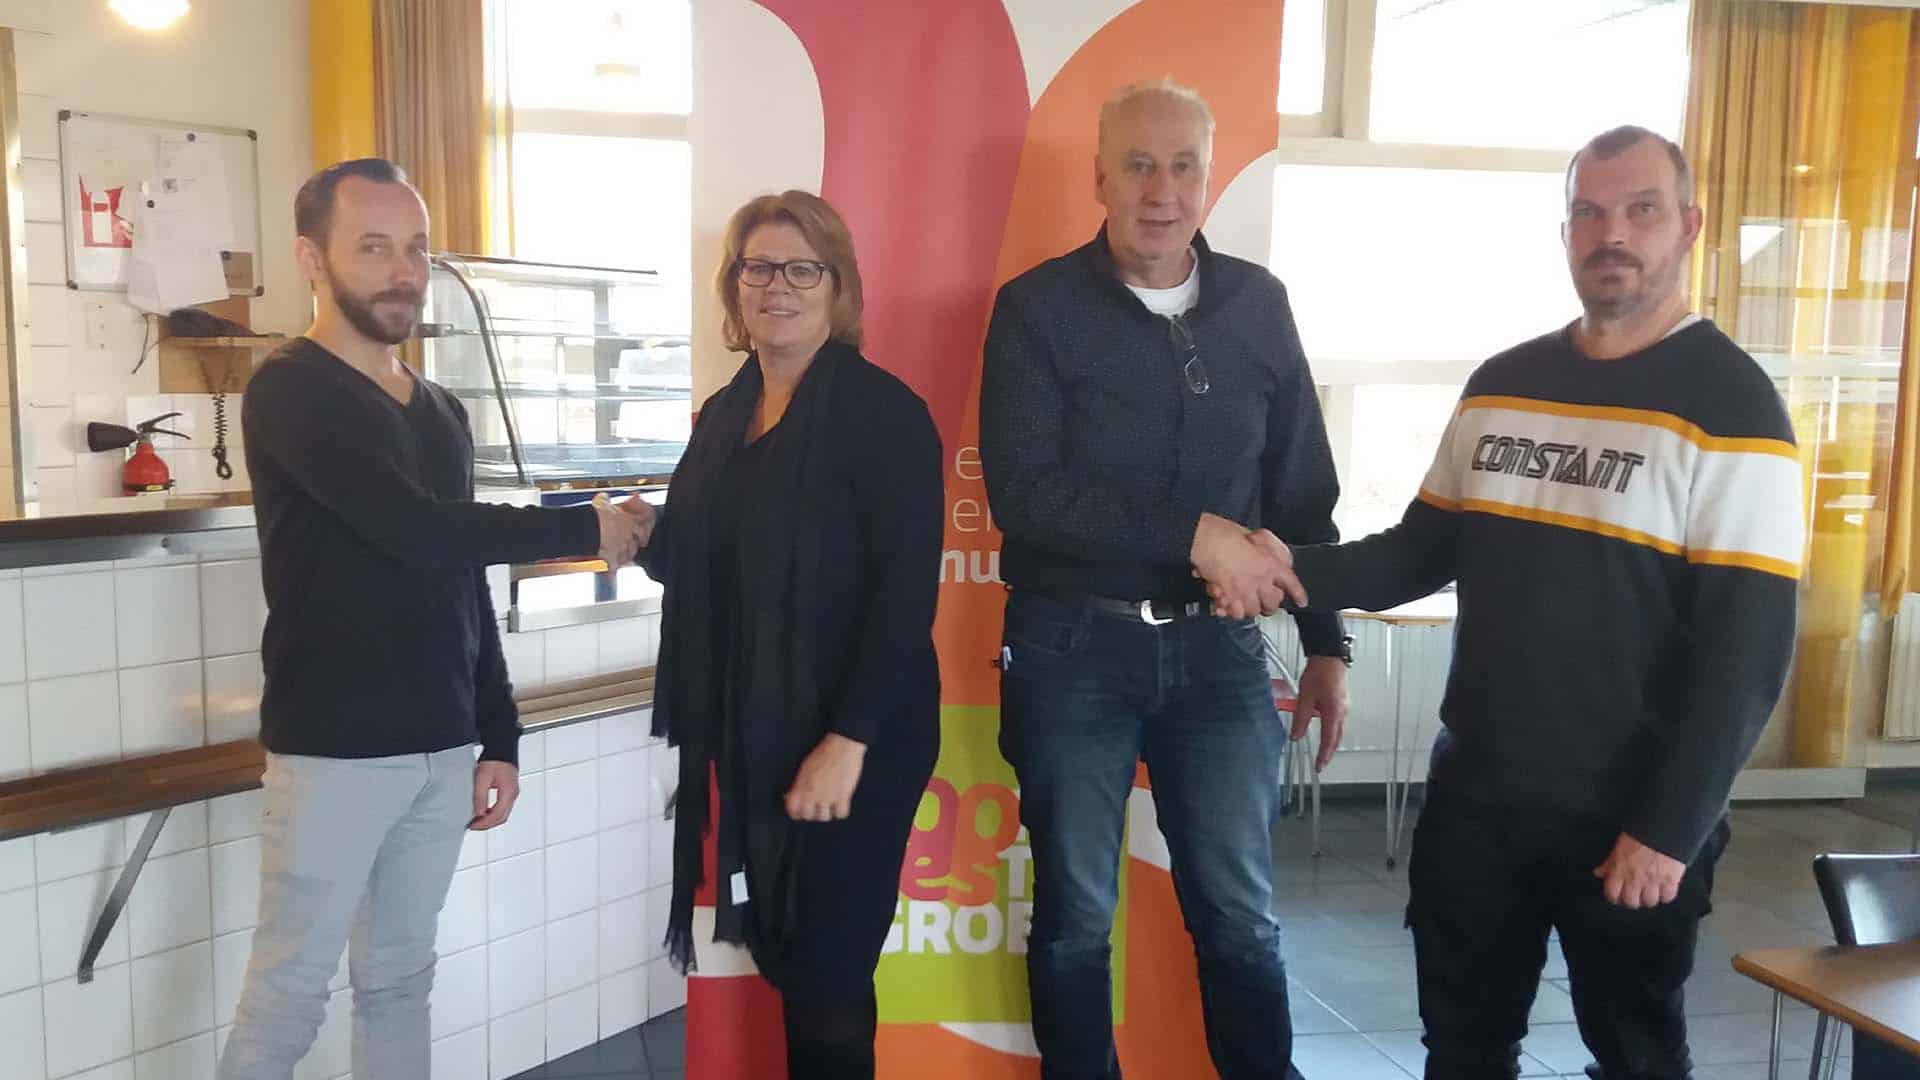 Sonja Fokkens en Harm Knol feliciteren twee nieuwe collega's